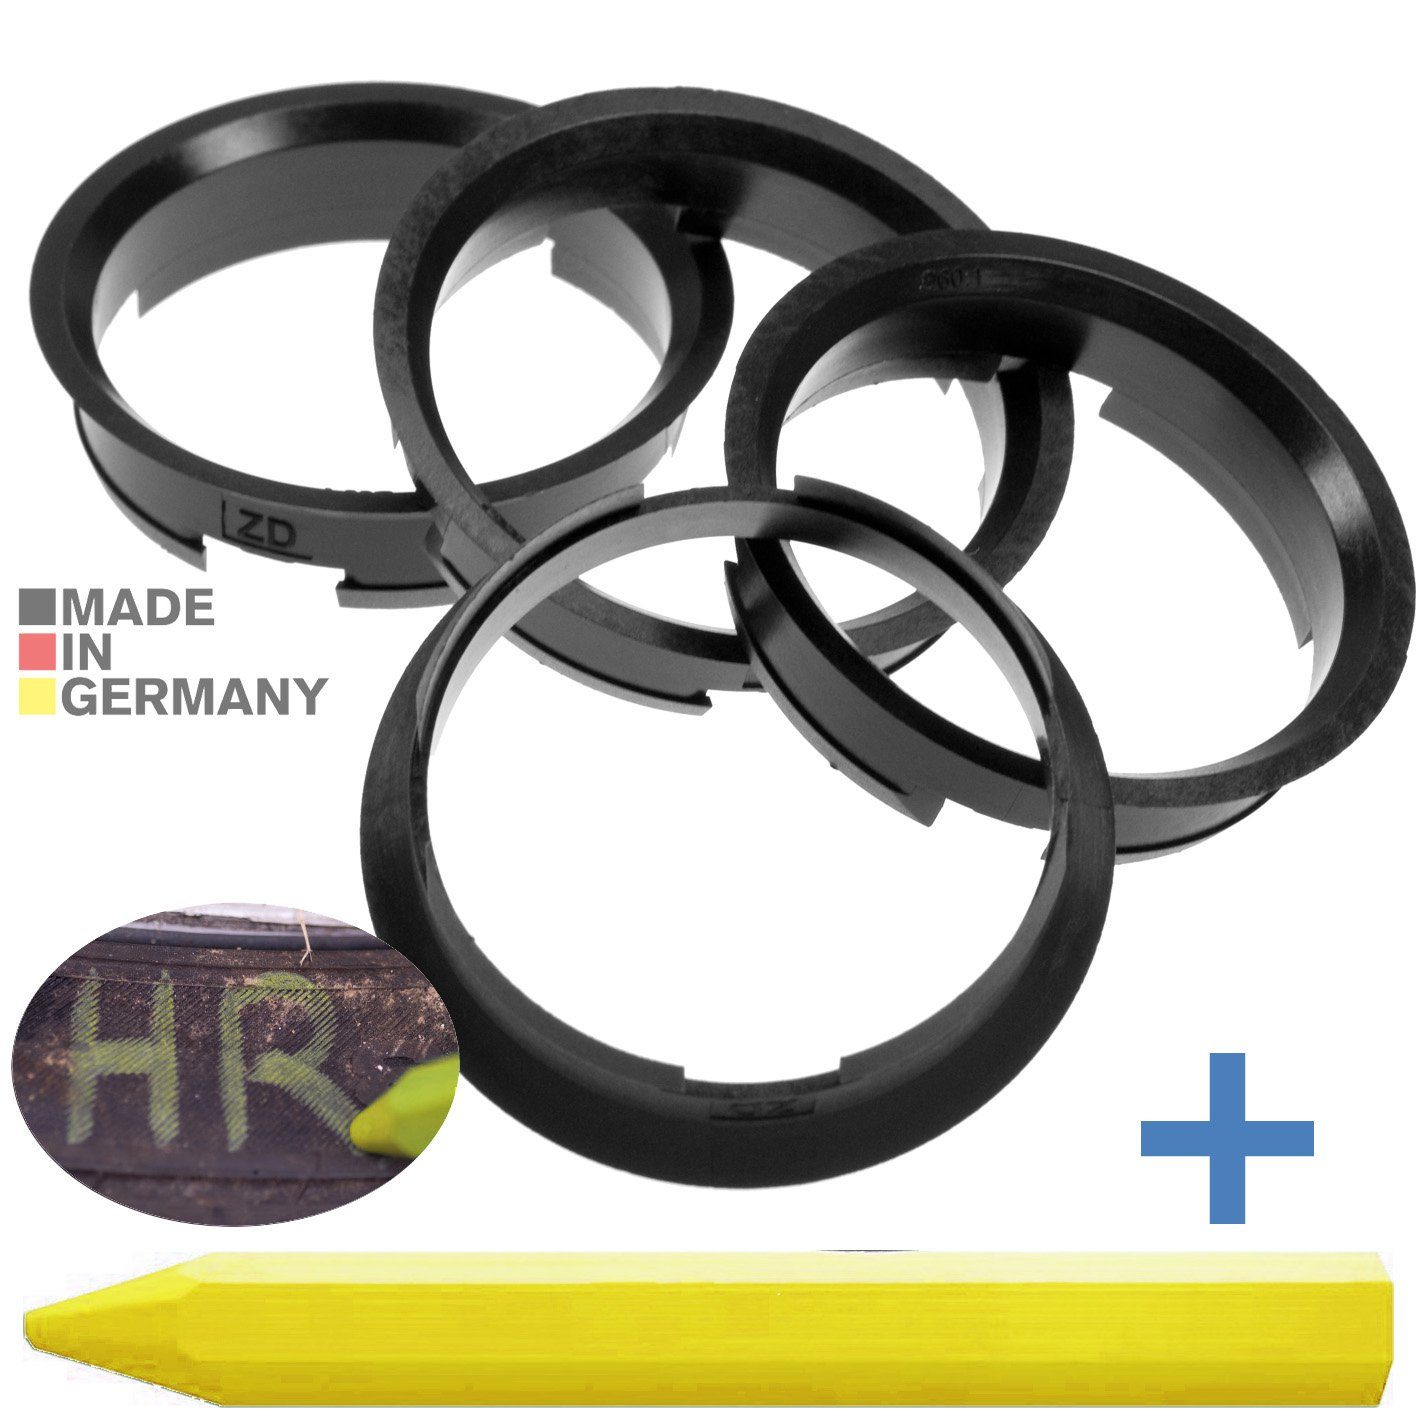 RKC Reifenstift 4X Zentrierringe Schwarz Felgen Ringe + 1x Reifen Kreide Fett Stift, Maße: 63,4 x 60,1 mm